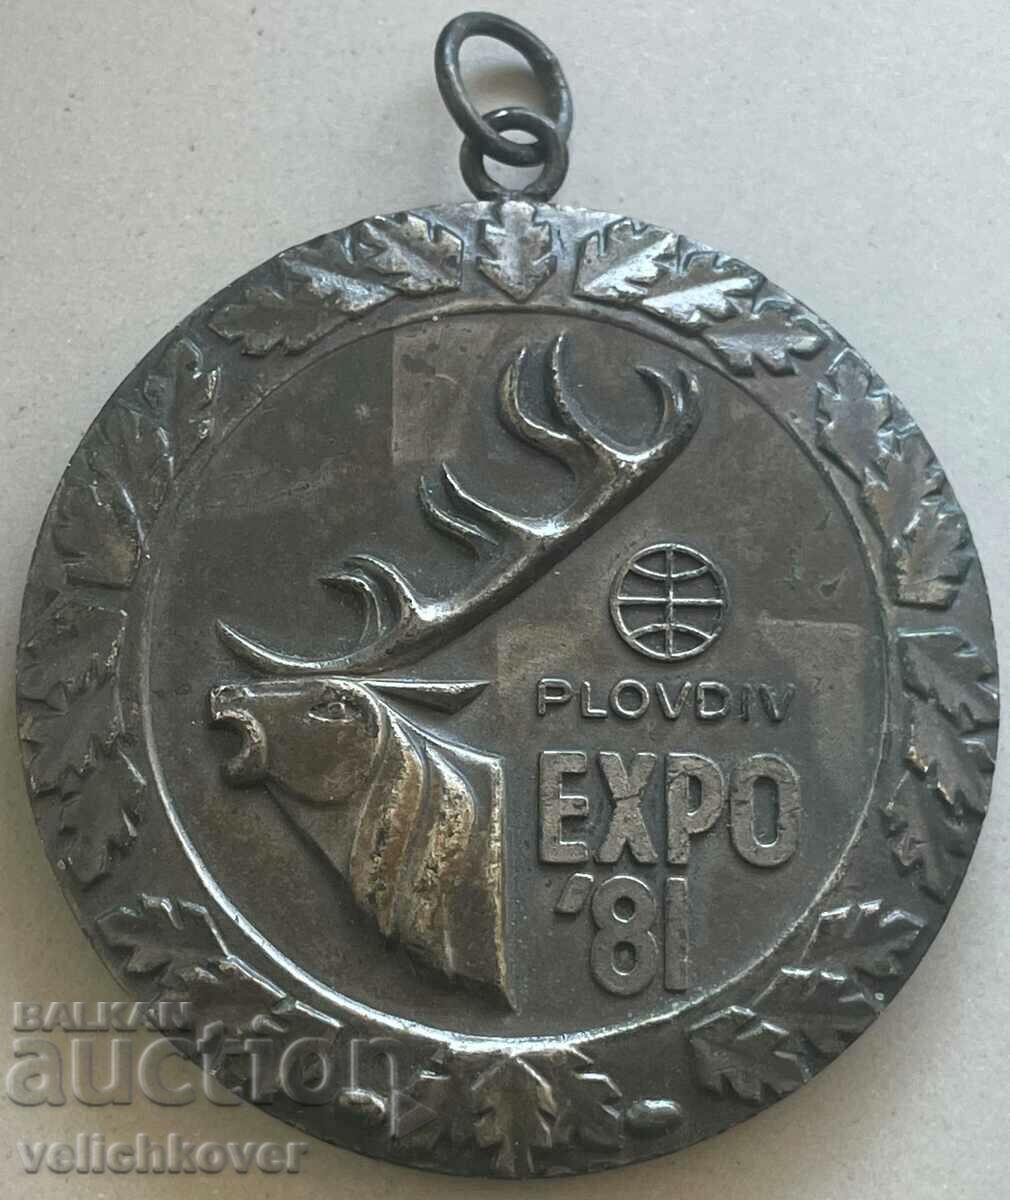 32916 Bulgaria Silver medal World Hunting Exhibition Plovdiv